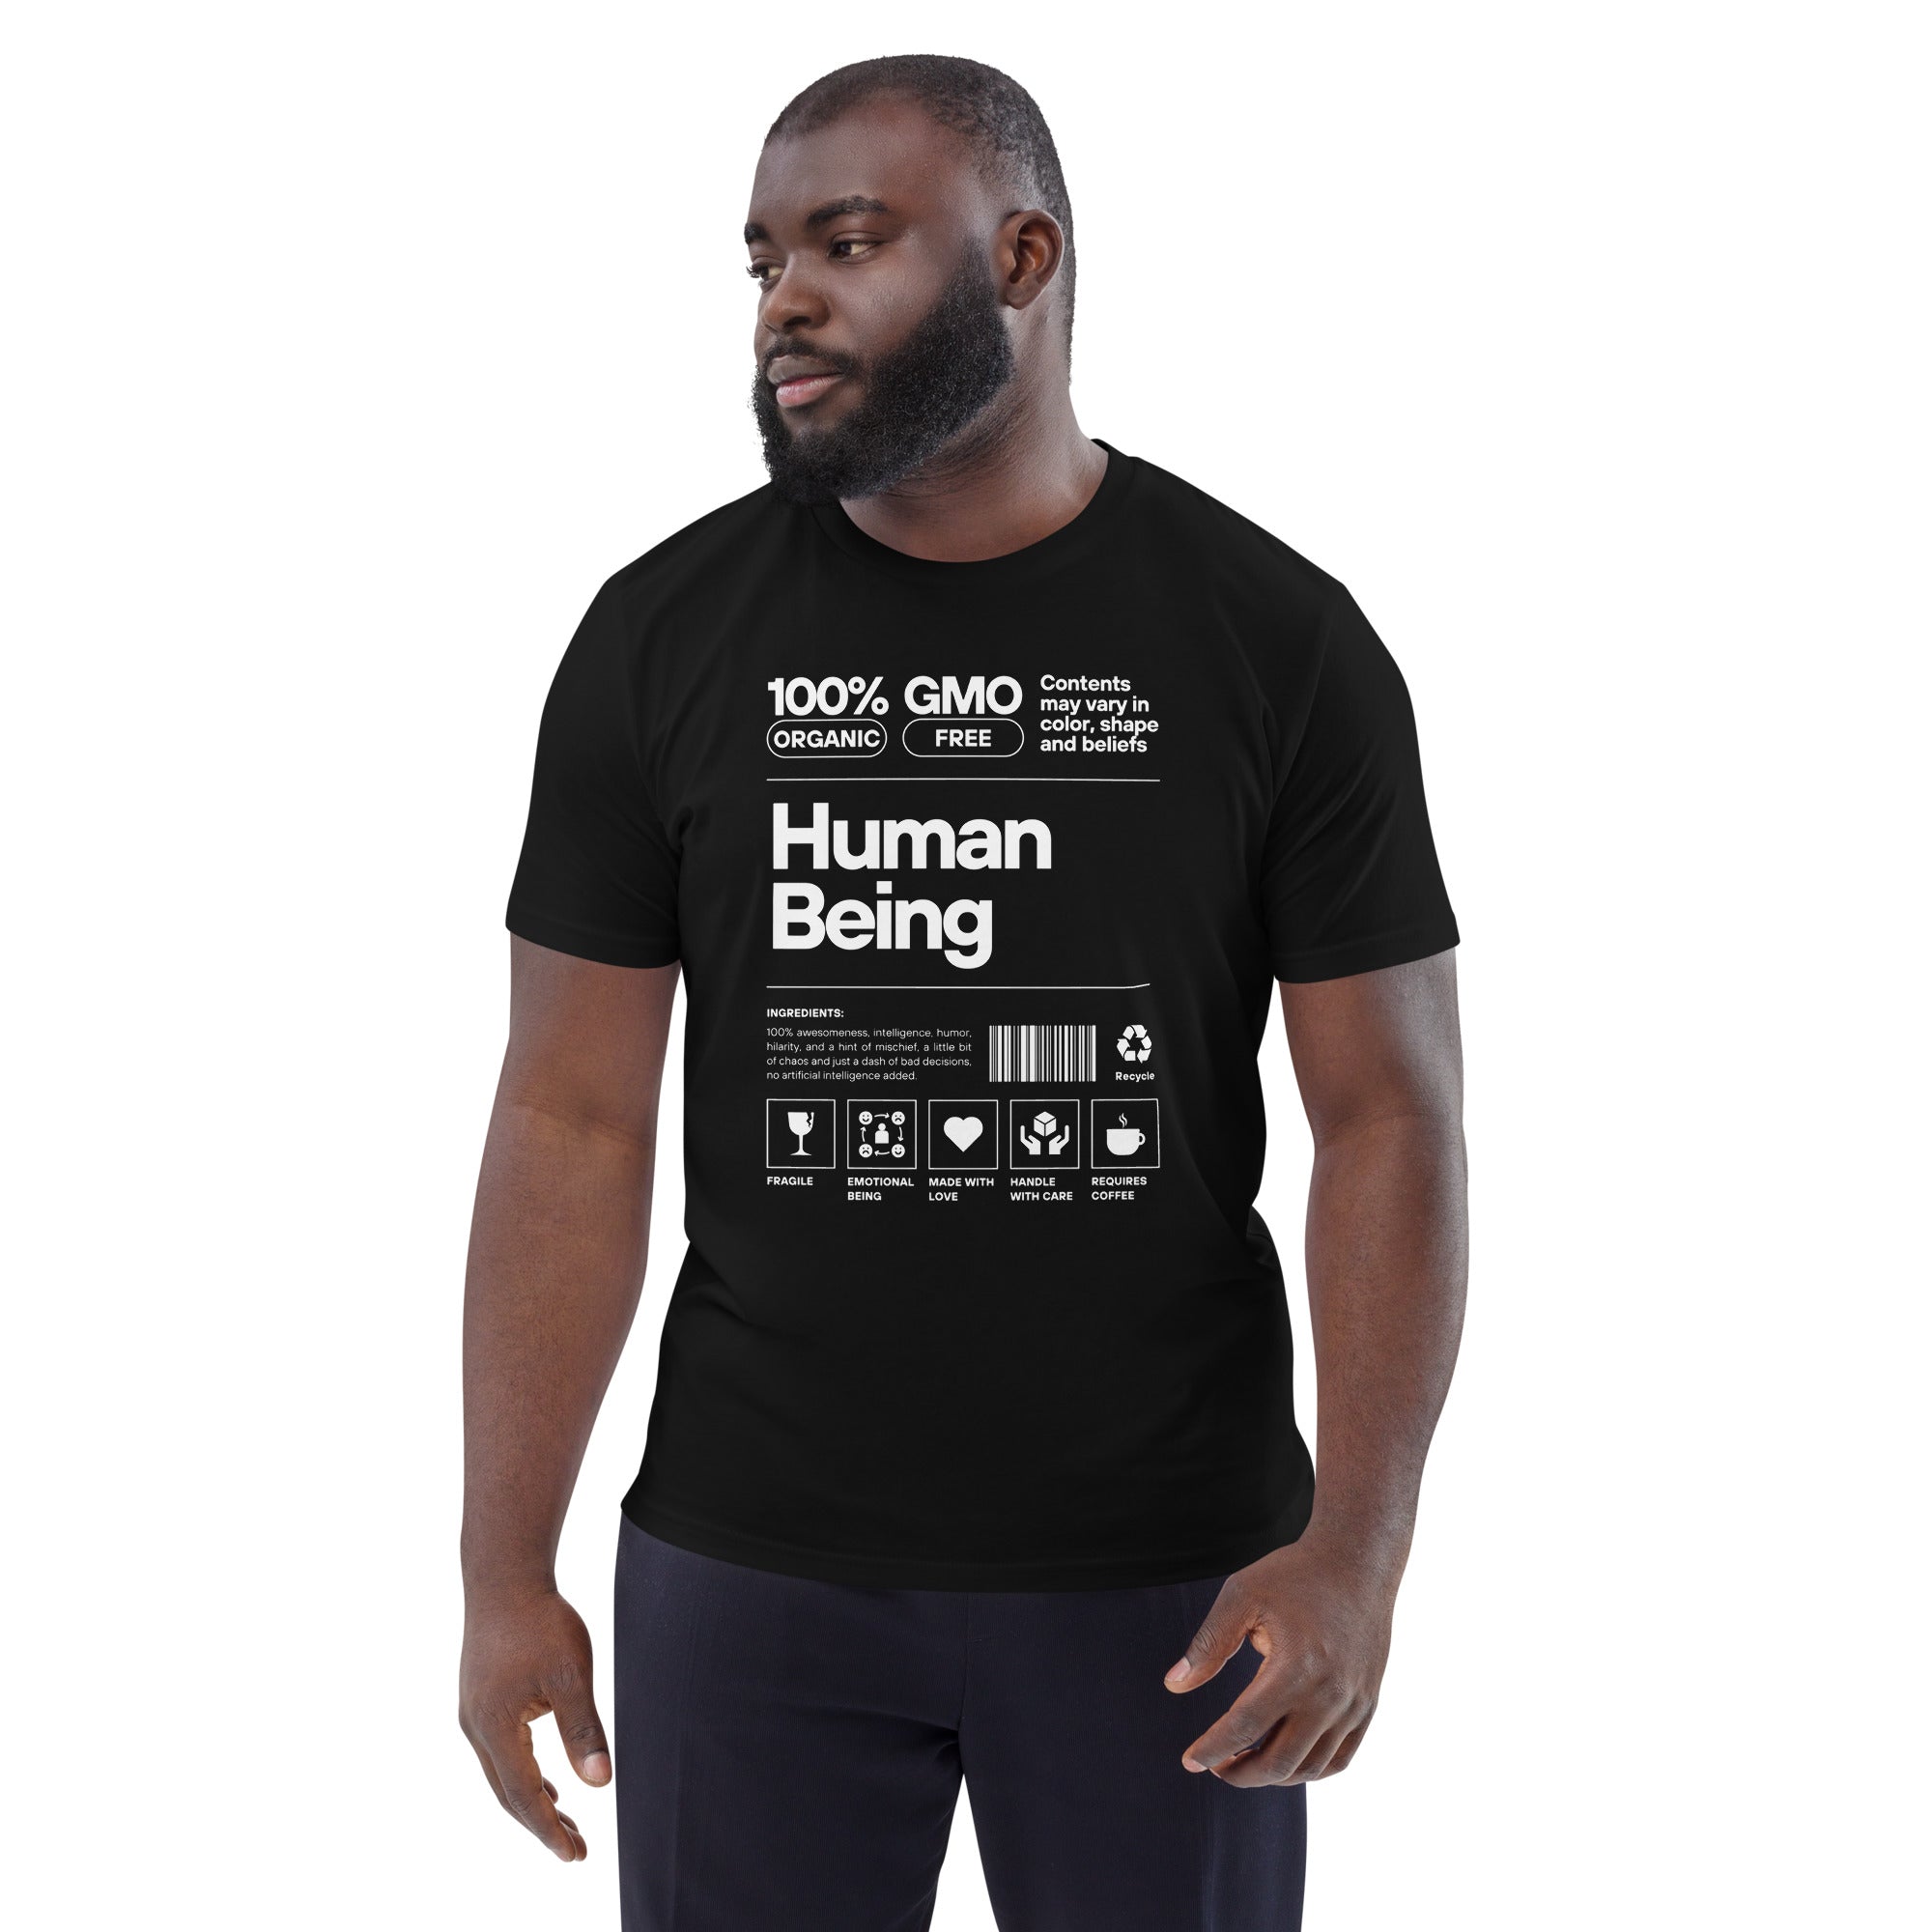 Human Being Label T-shirt